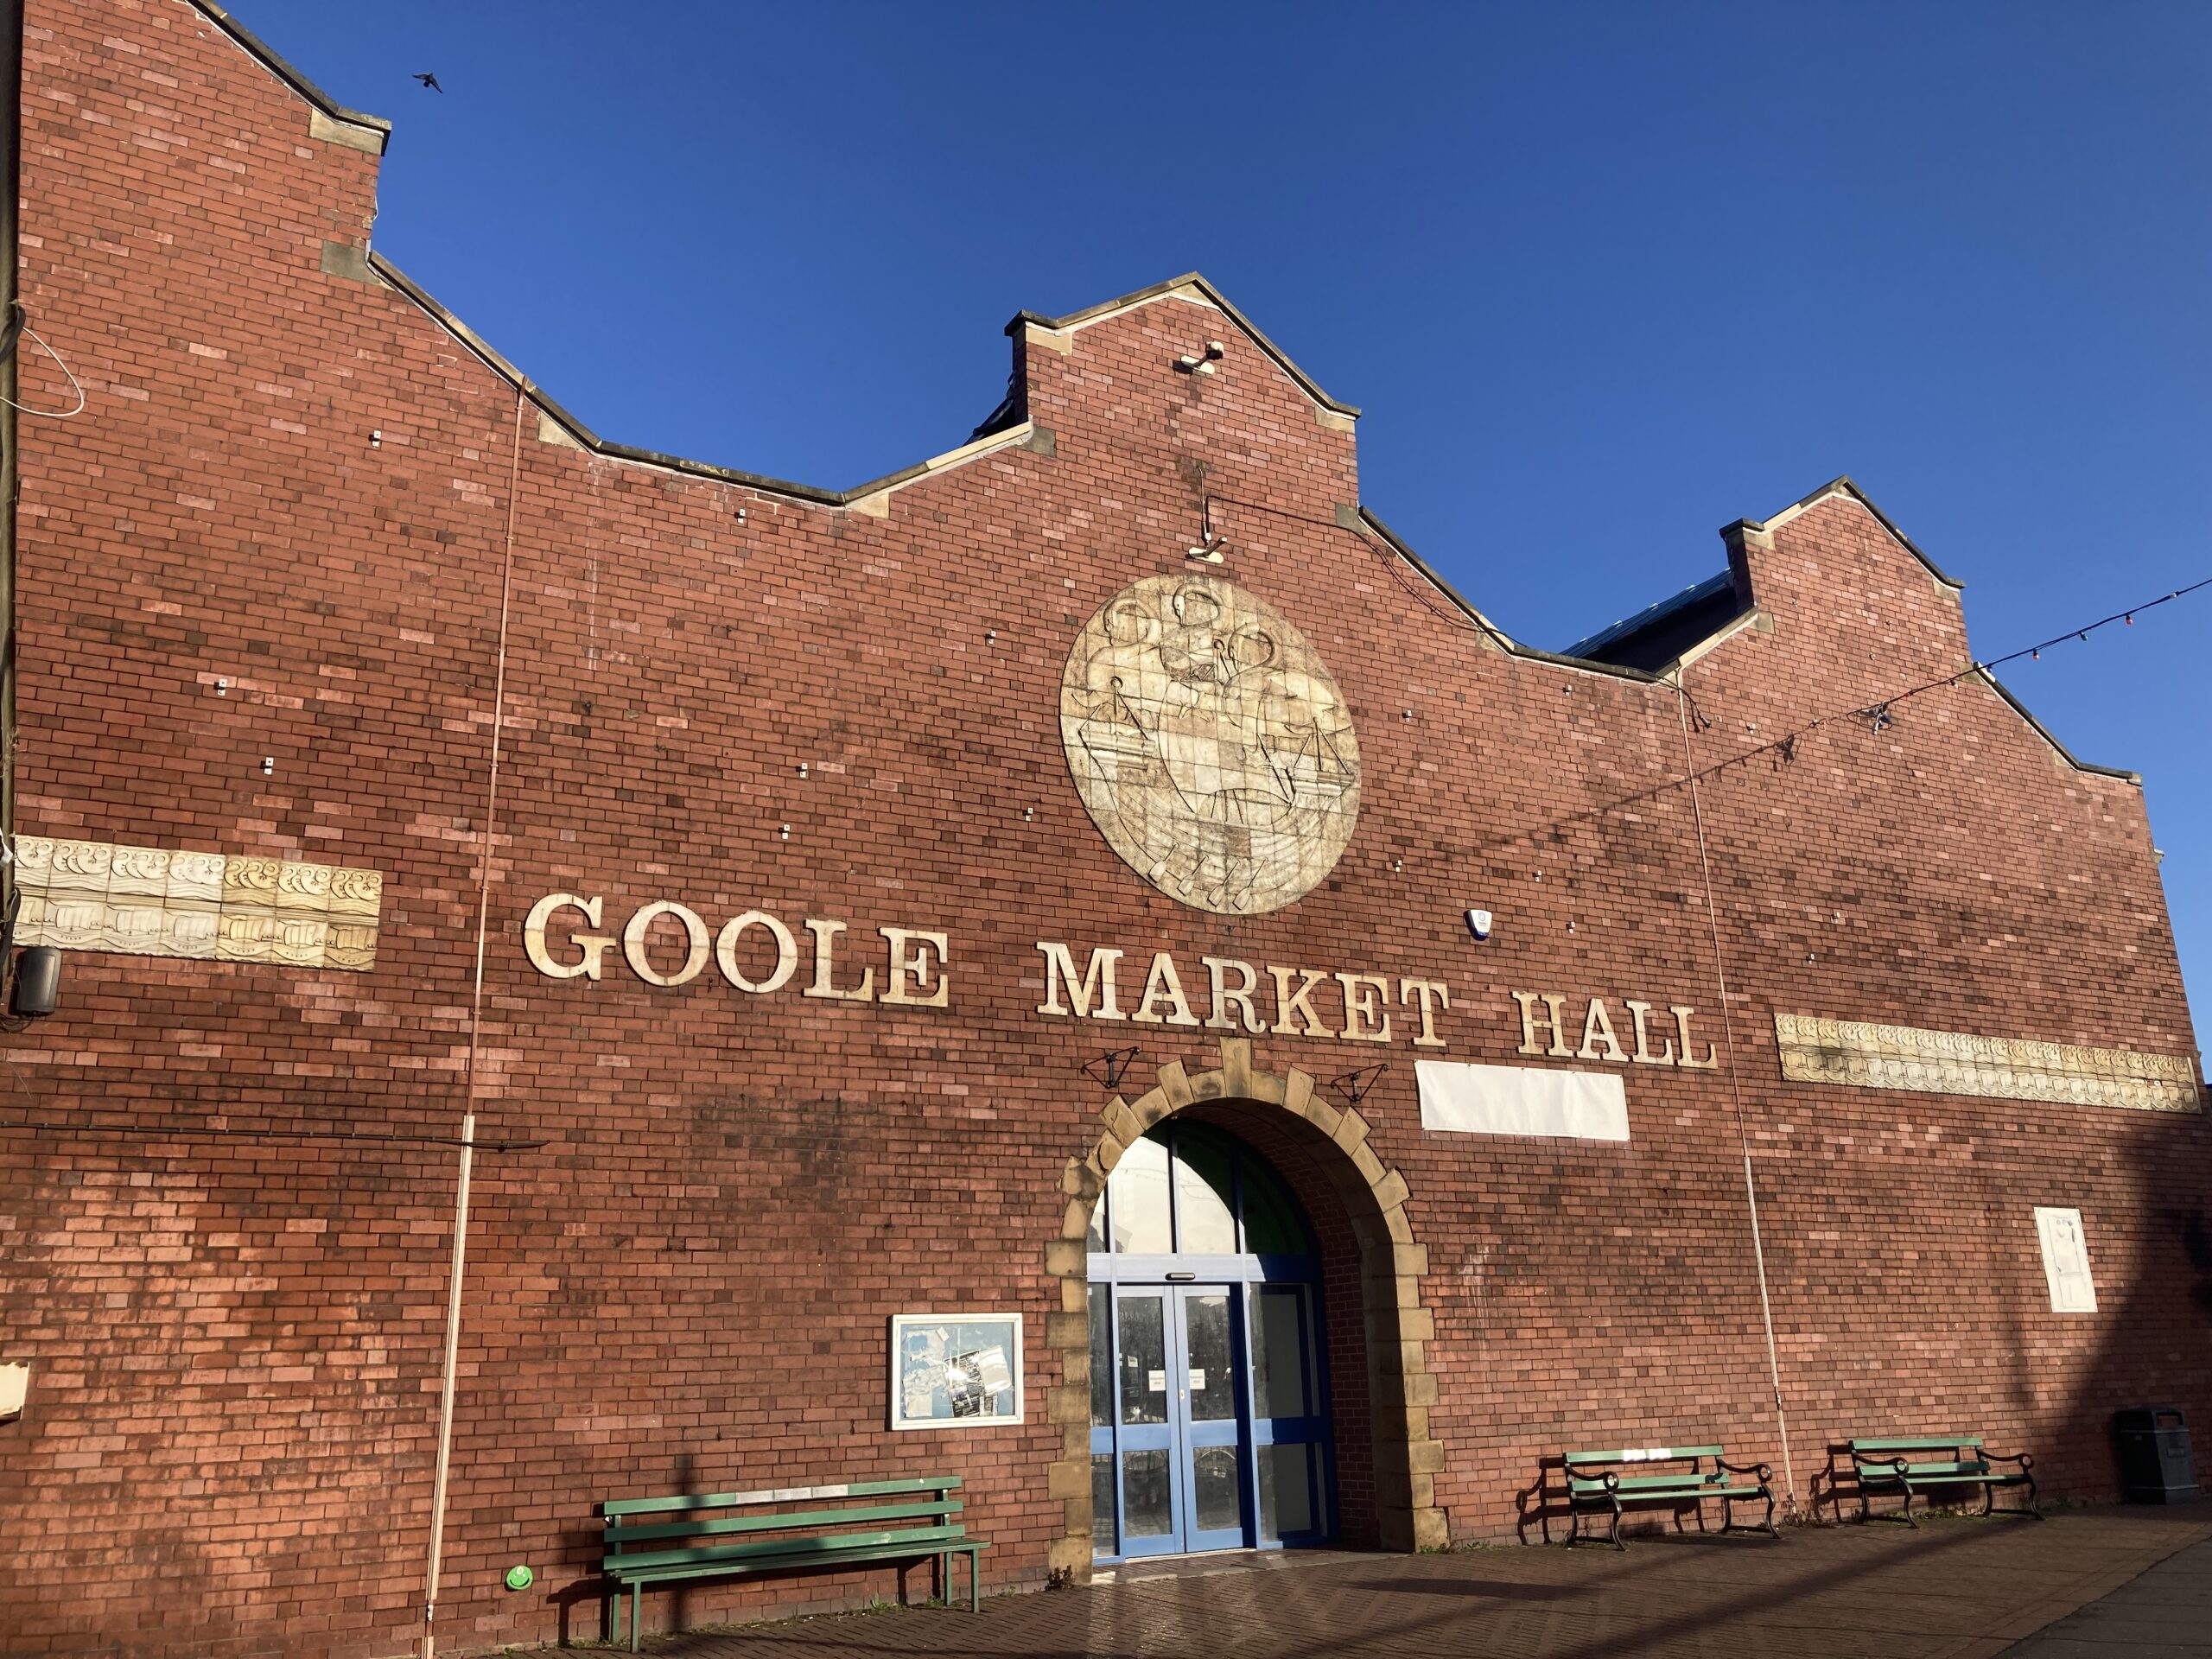 External image of Goole Market Hall